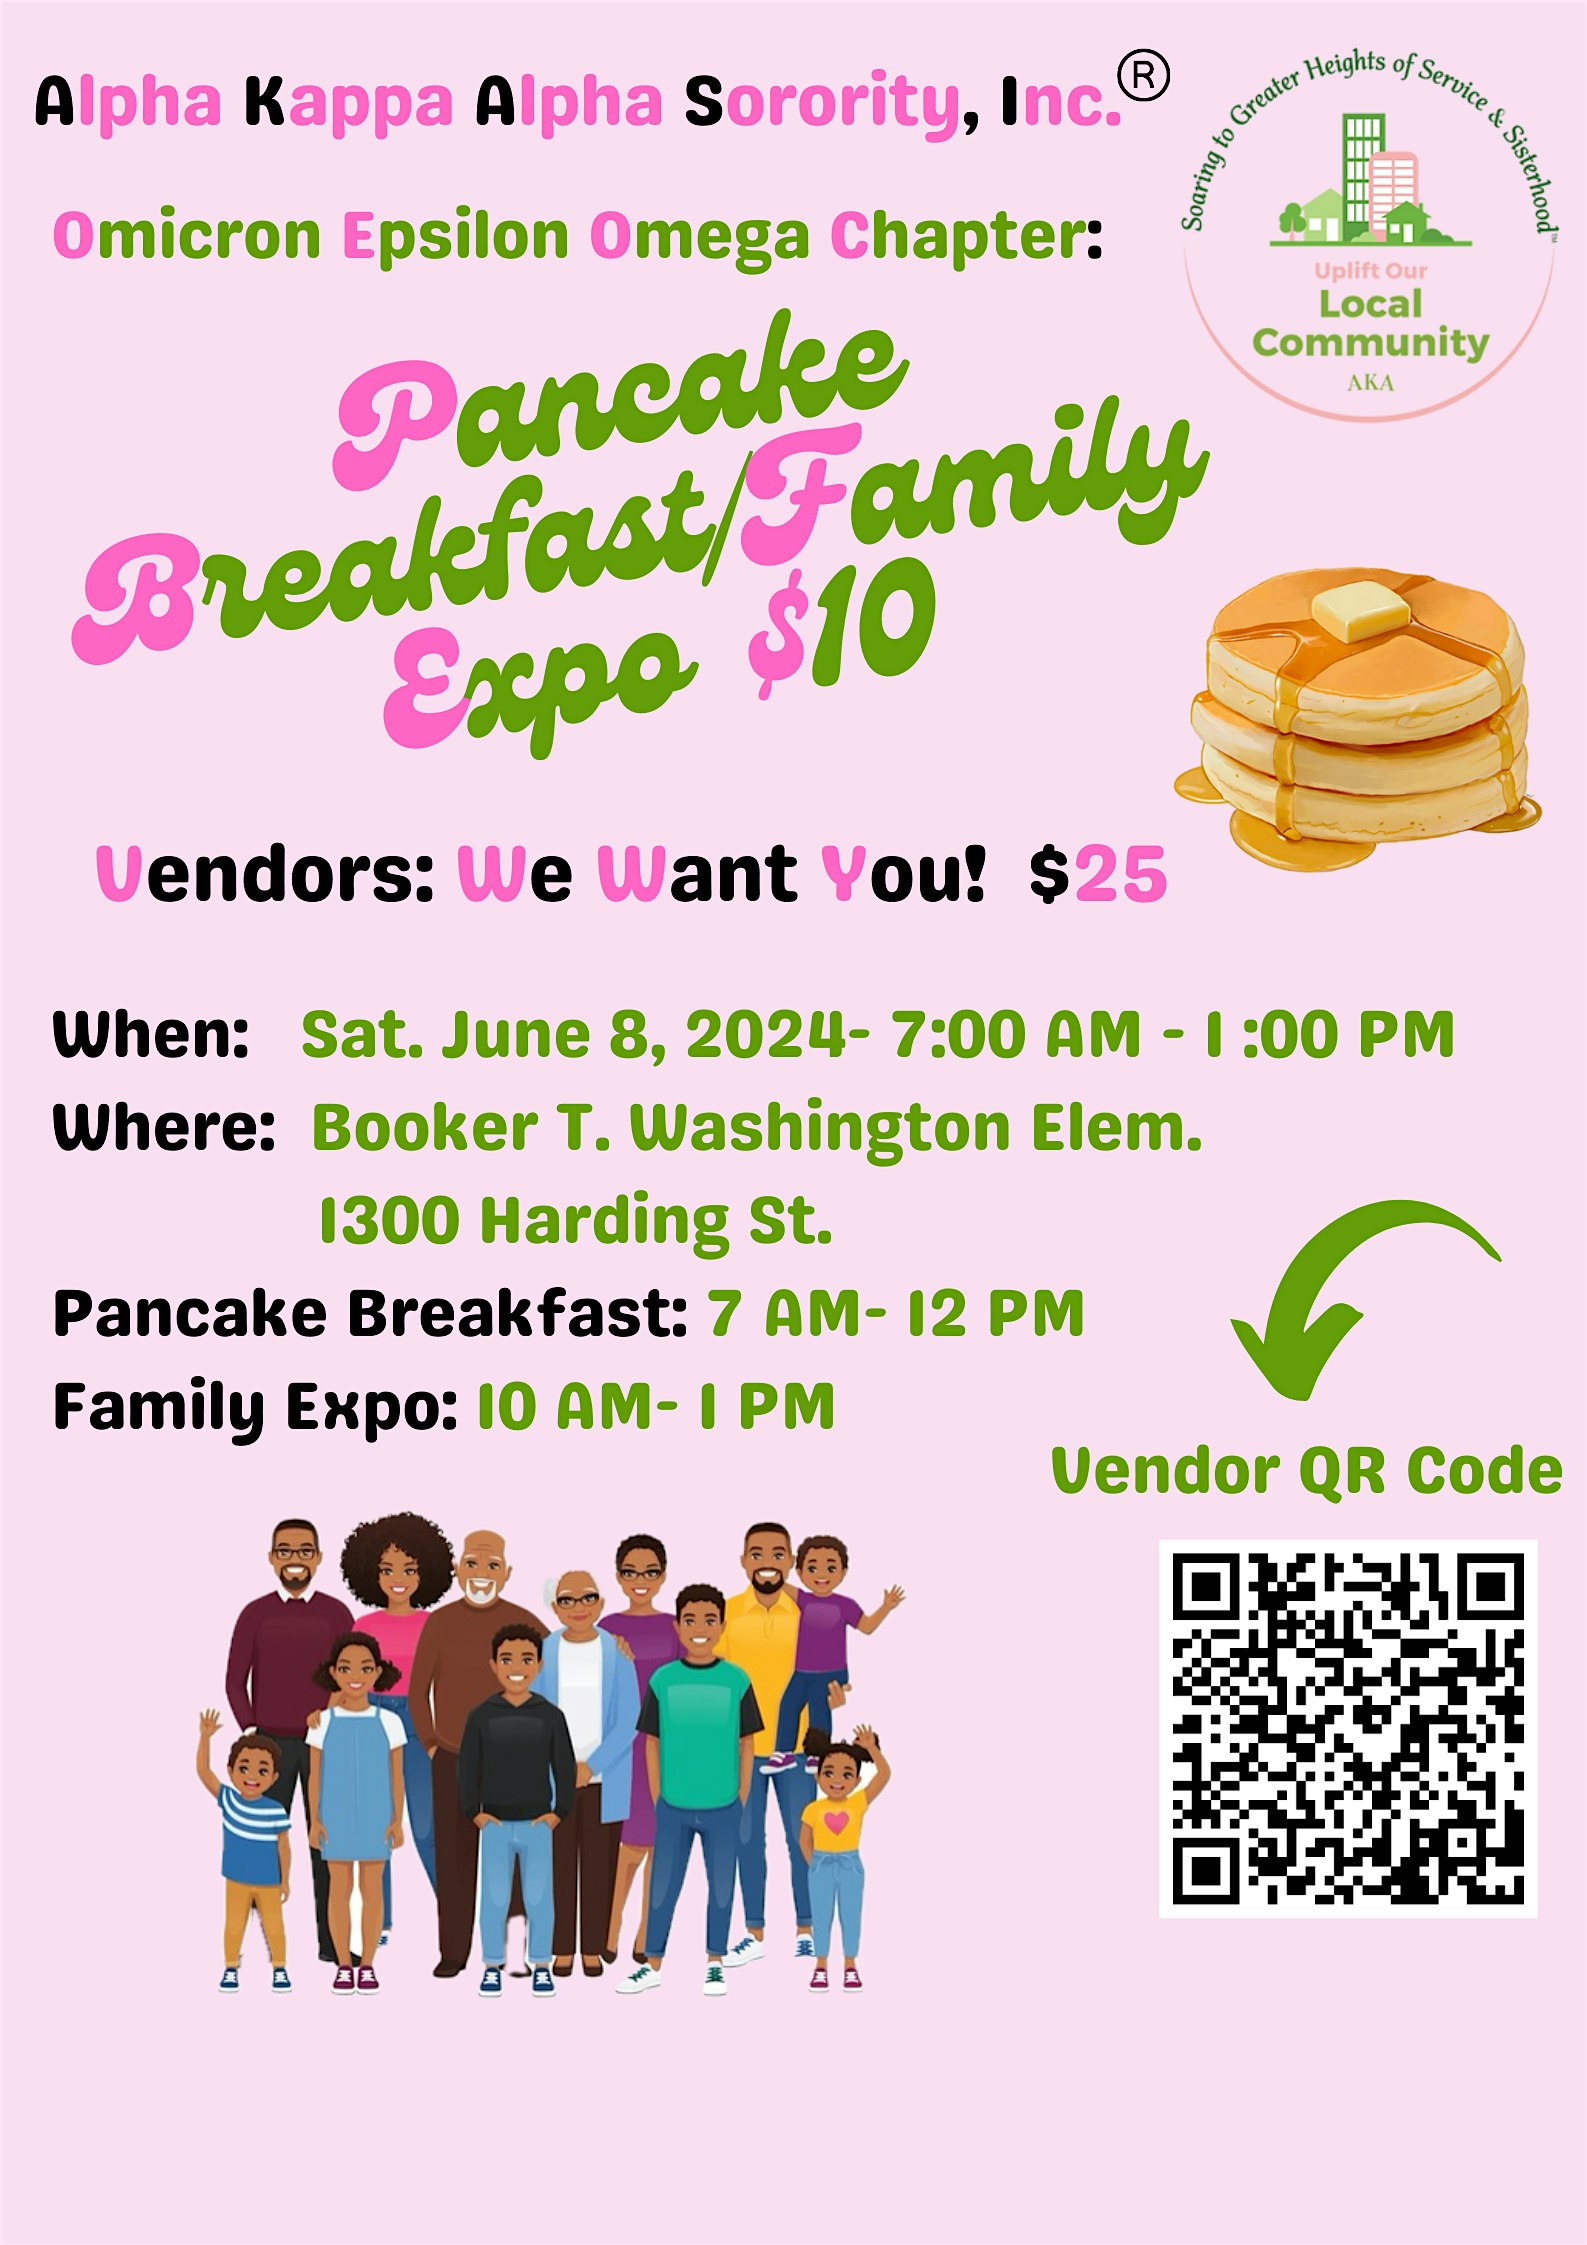 Omicron Epsilon Omega Annual Pancake Breakfast